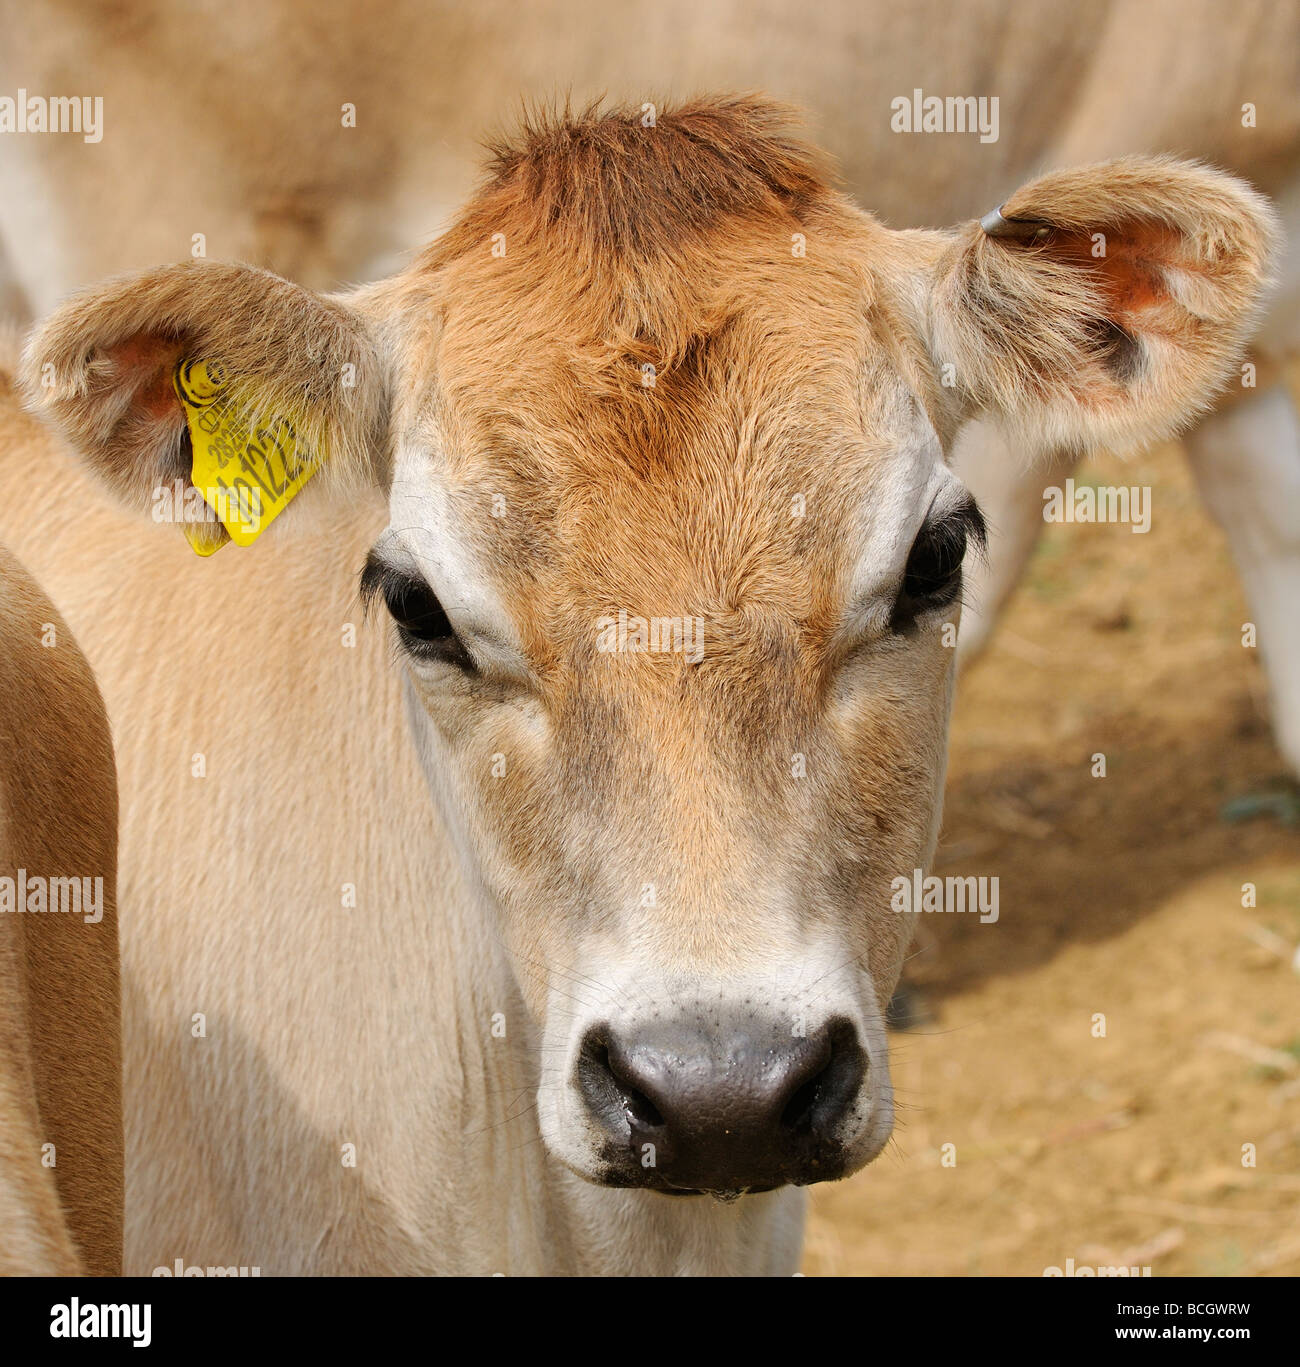 Cute Jersey cow calf close up Stock Photo - Alamy